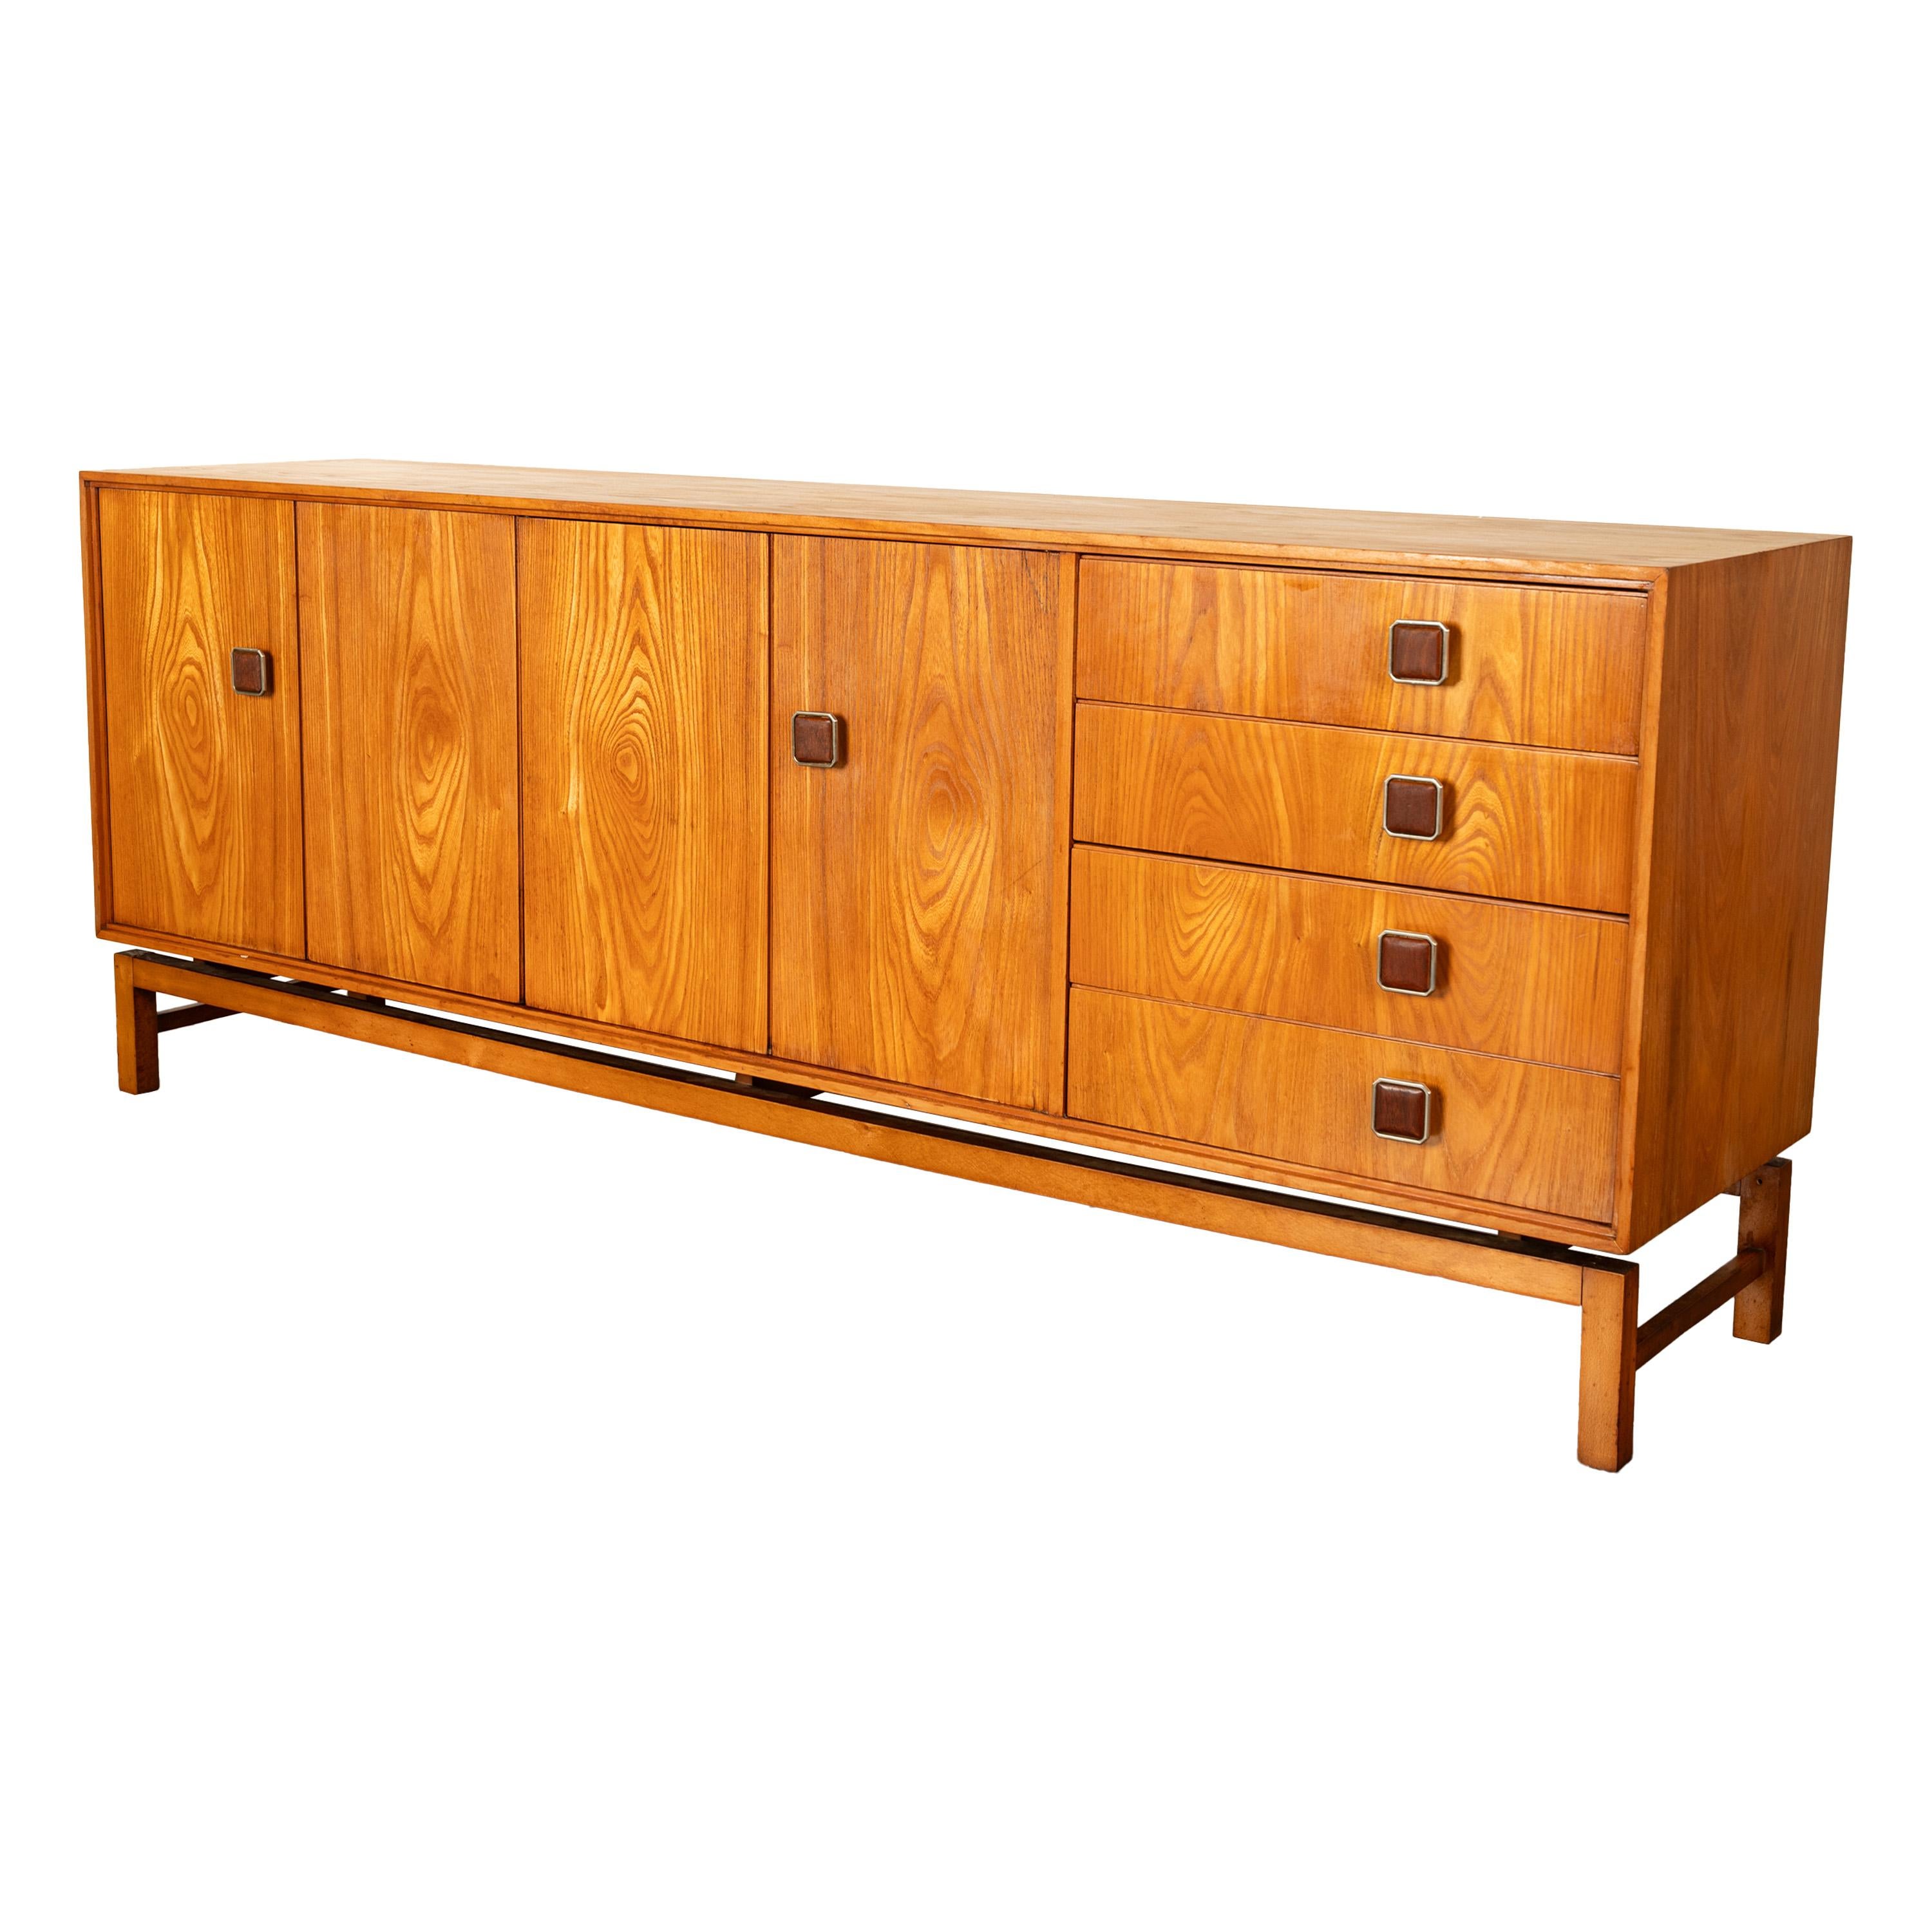 Original Danish Mid Century Modern Teak Credenza Sideboard Cabinet 6' Long 1960  10